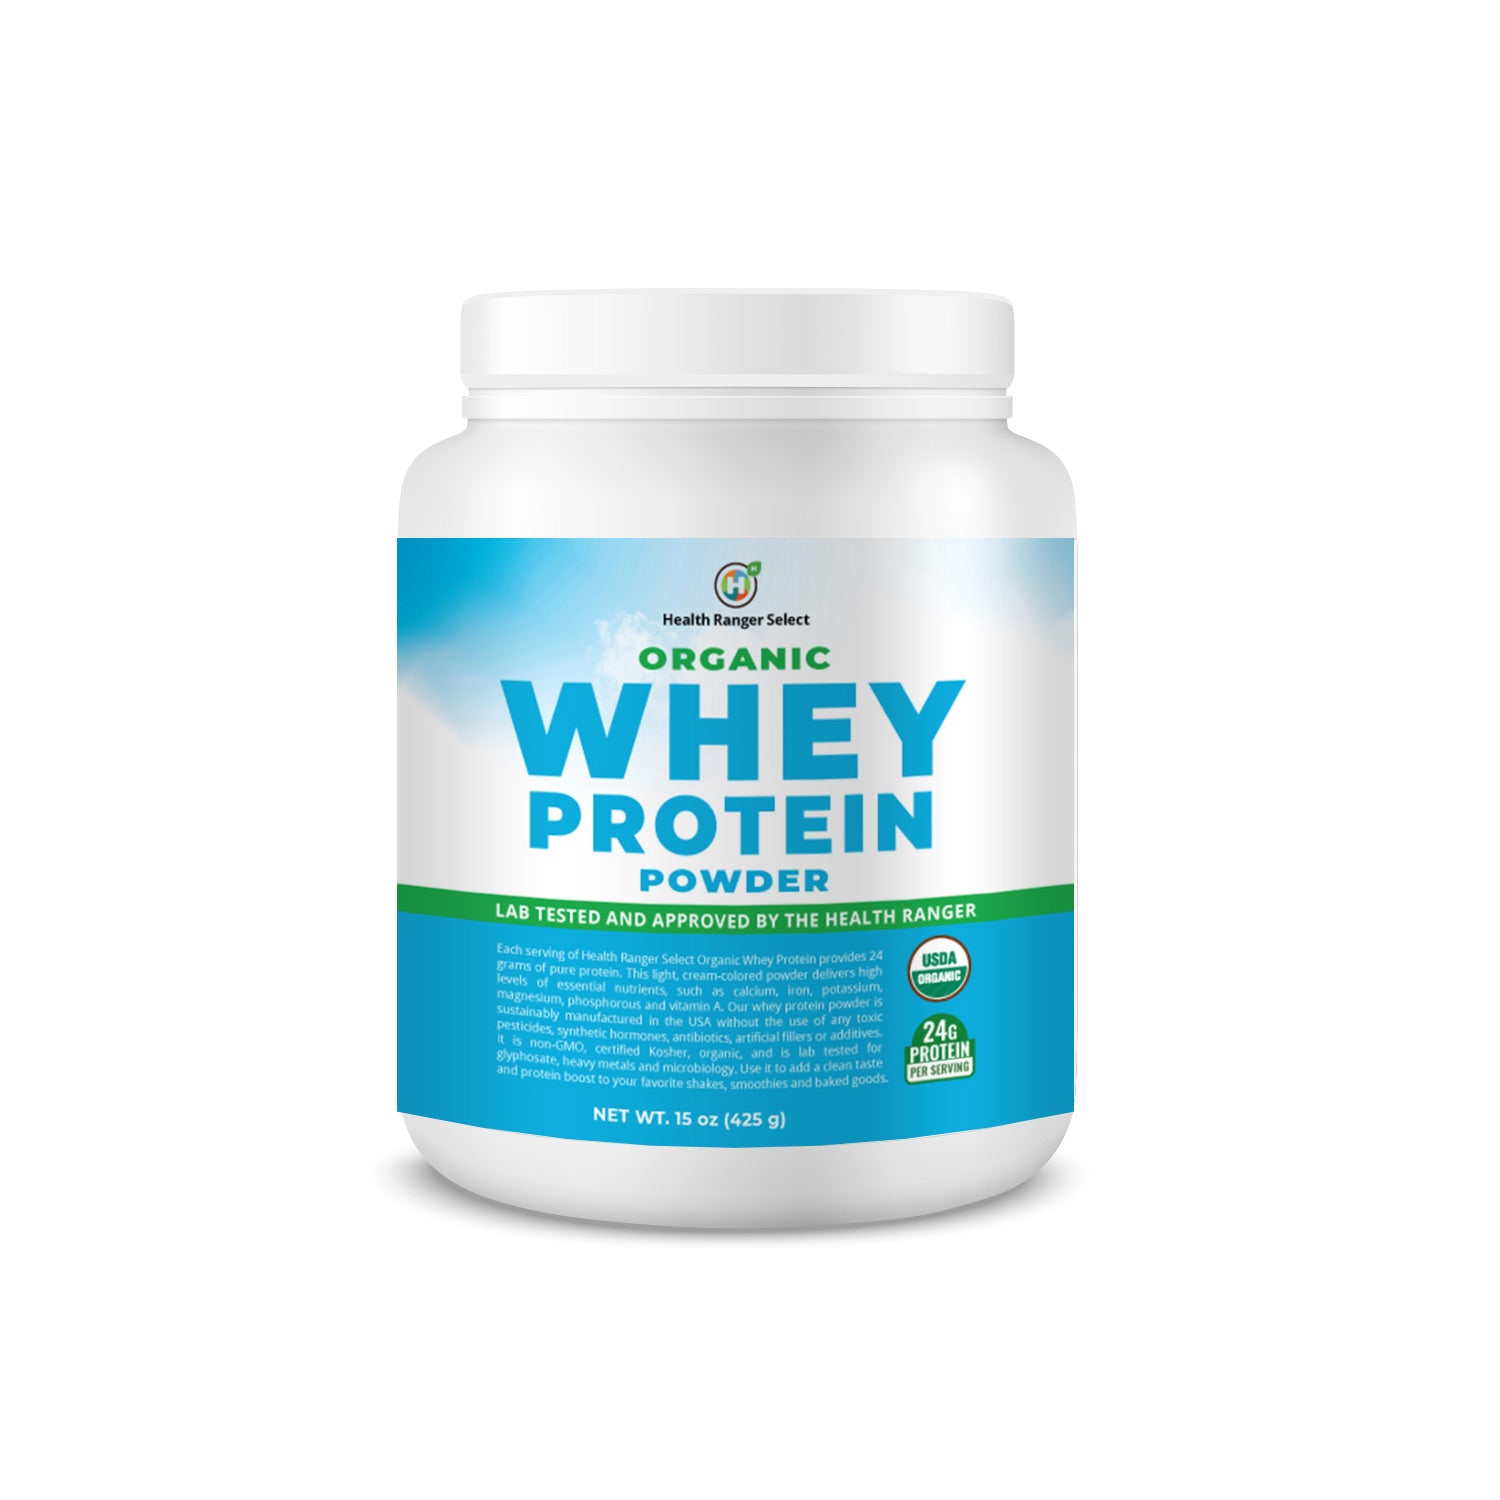 Organic Whey Protein Powder 15 oz (425g) (6-Pack)